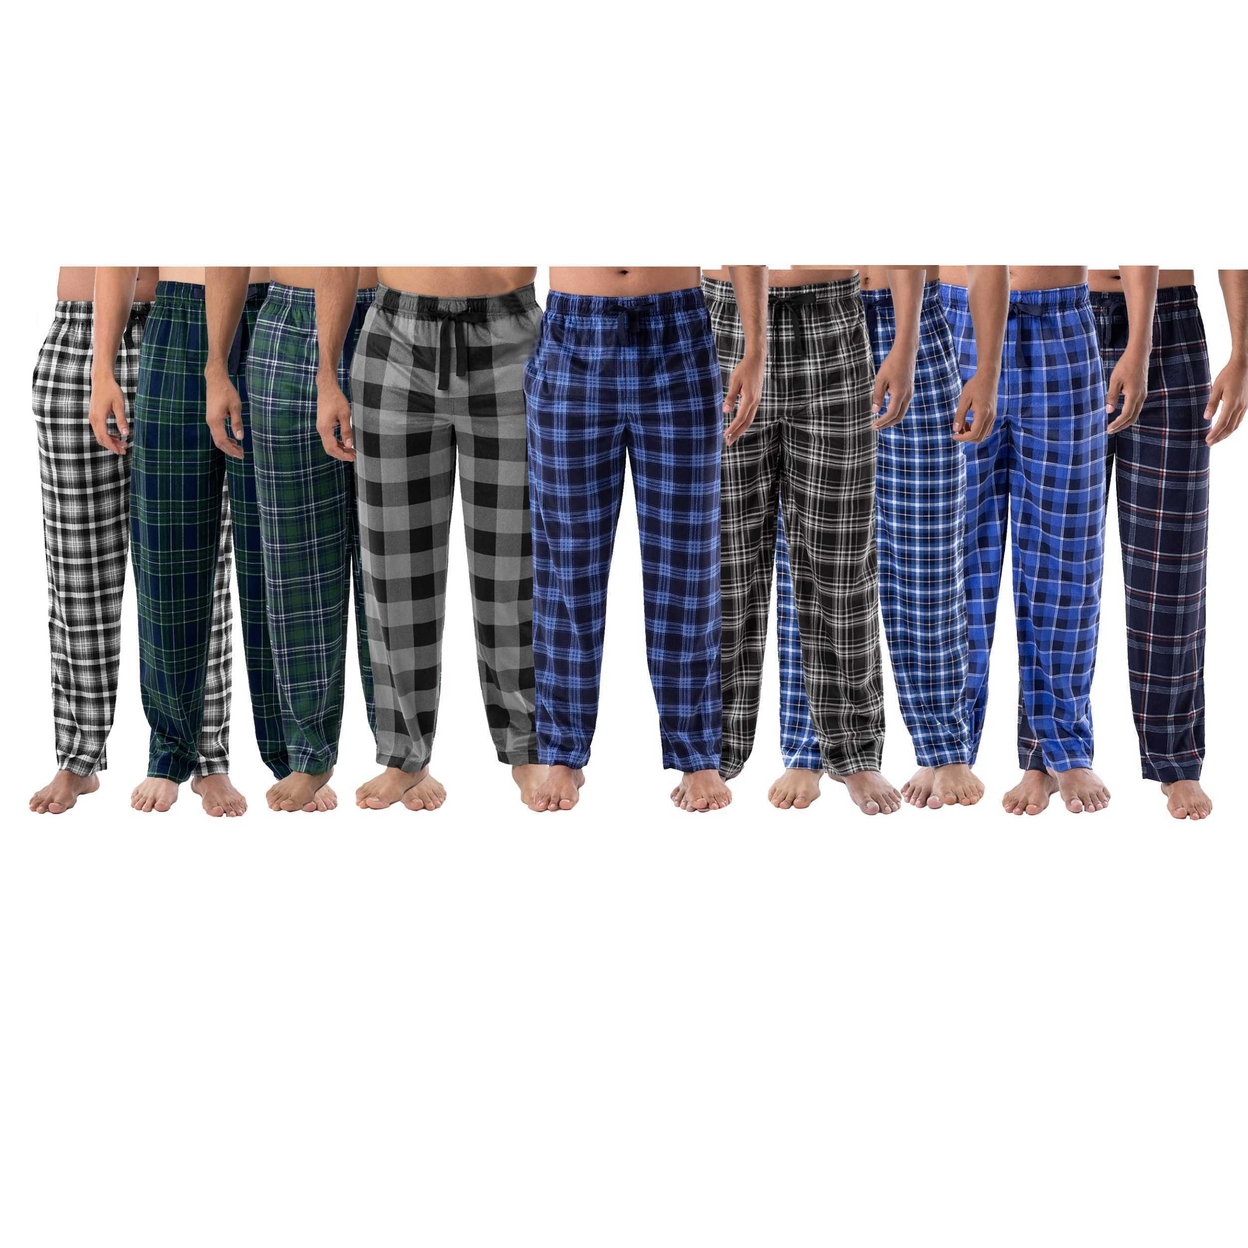 4-Pack: Men's Ultra-Soft Cozy Lounge Sleep Micro Fleece Plaid Pajama Pants - Large